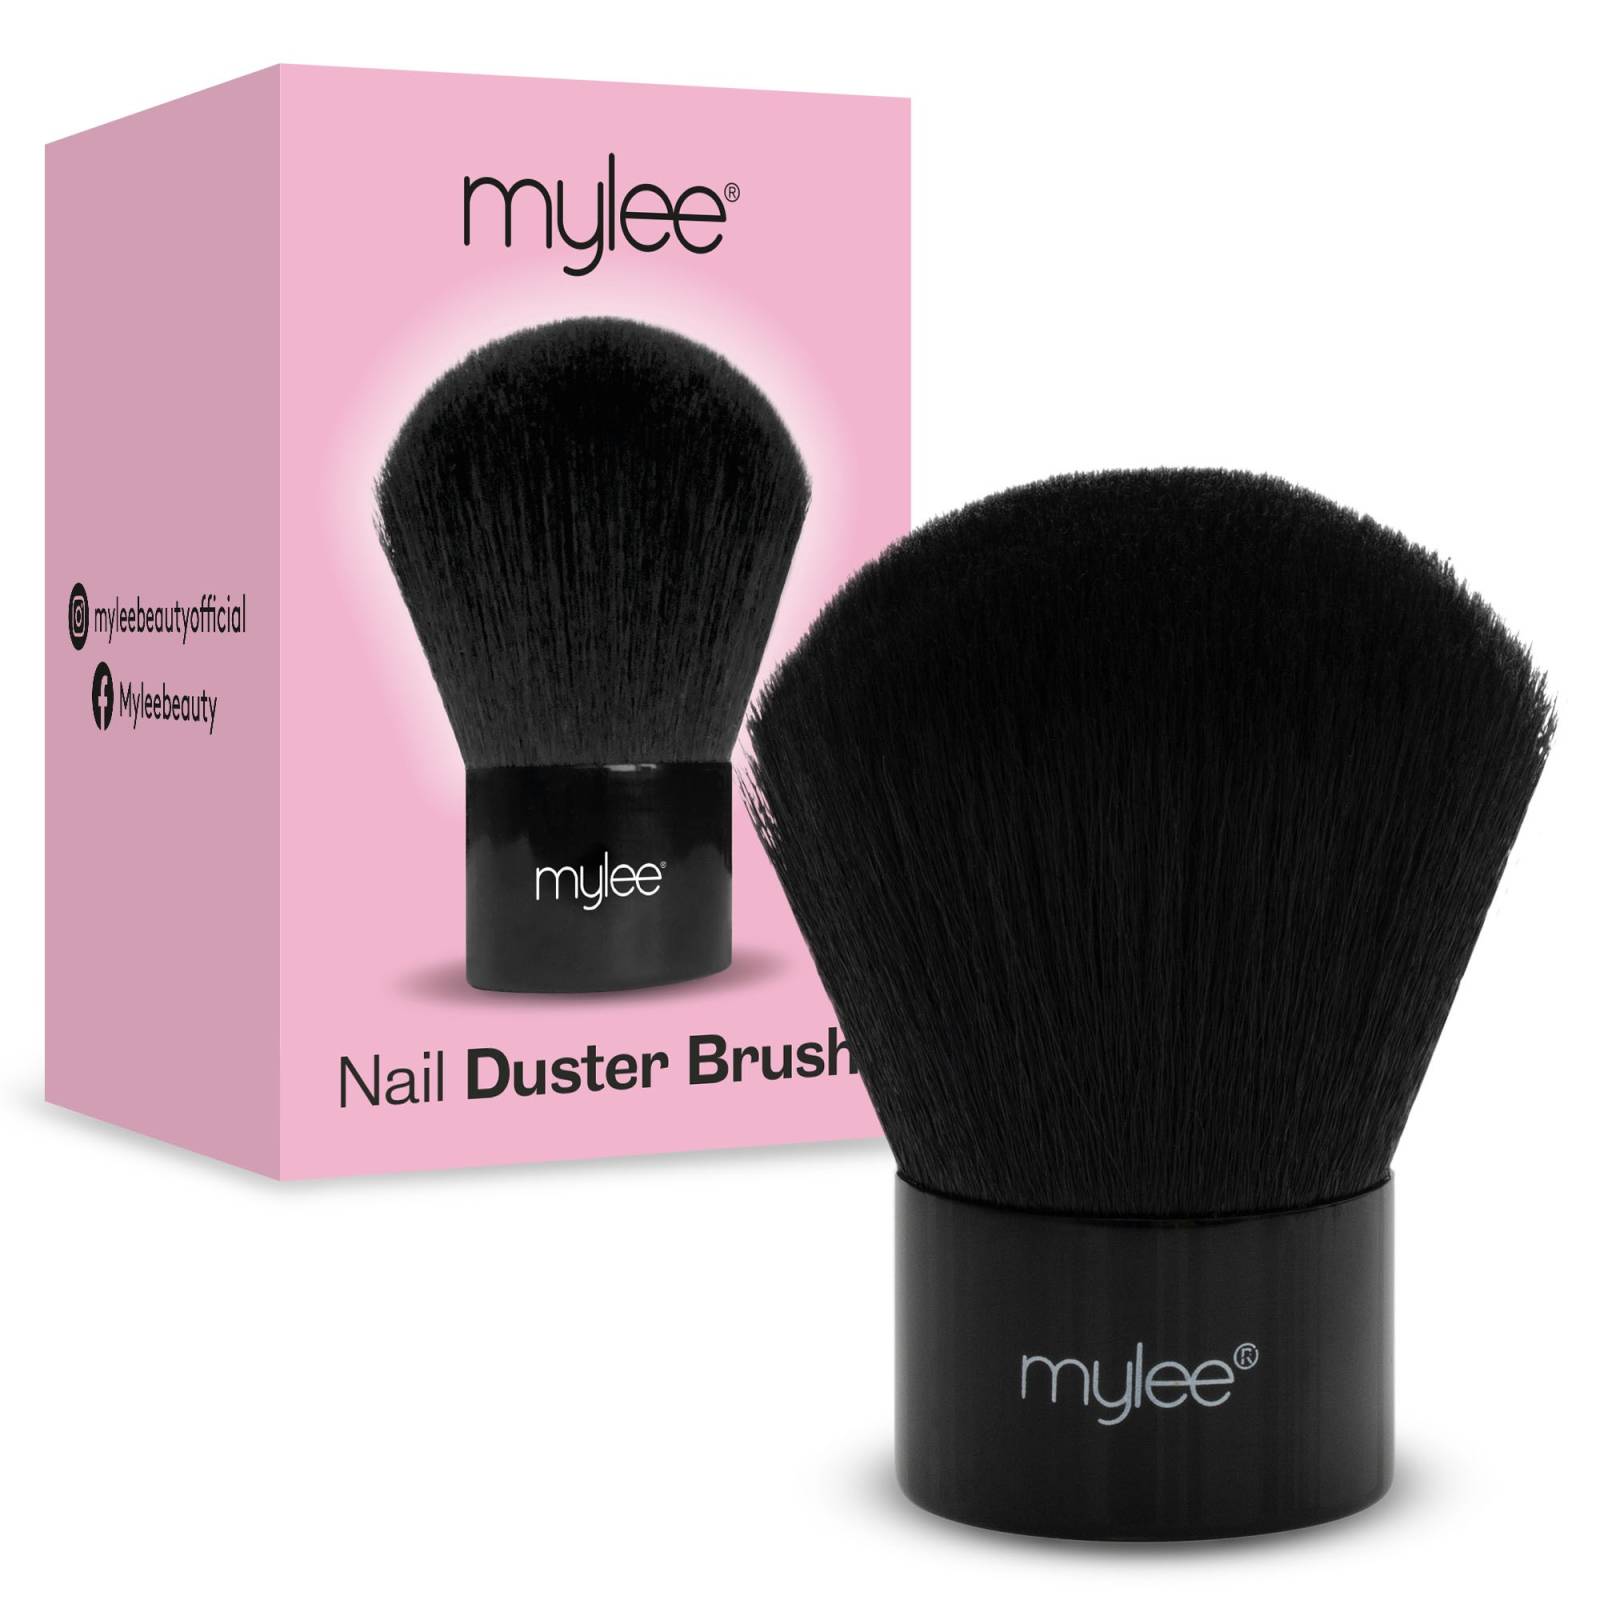 Mylee Nail Duster Brush - Nail Art Powder Cleaner